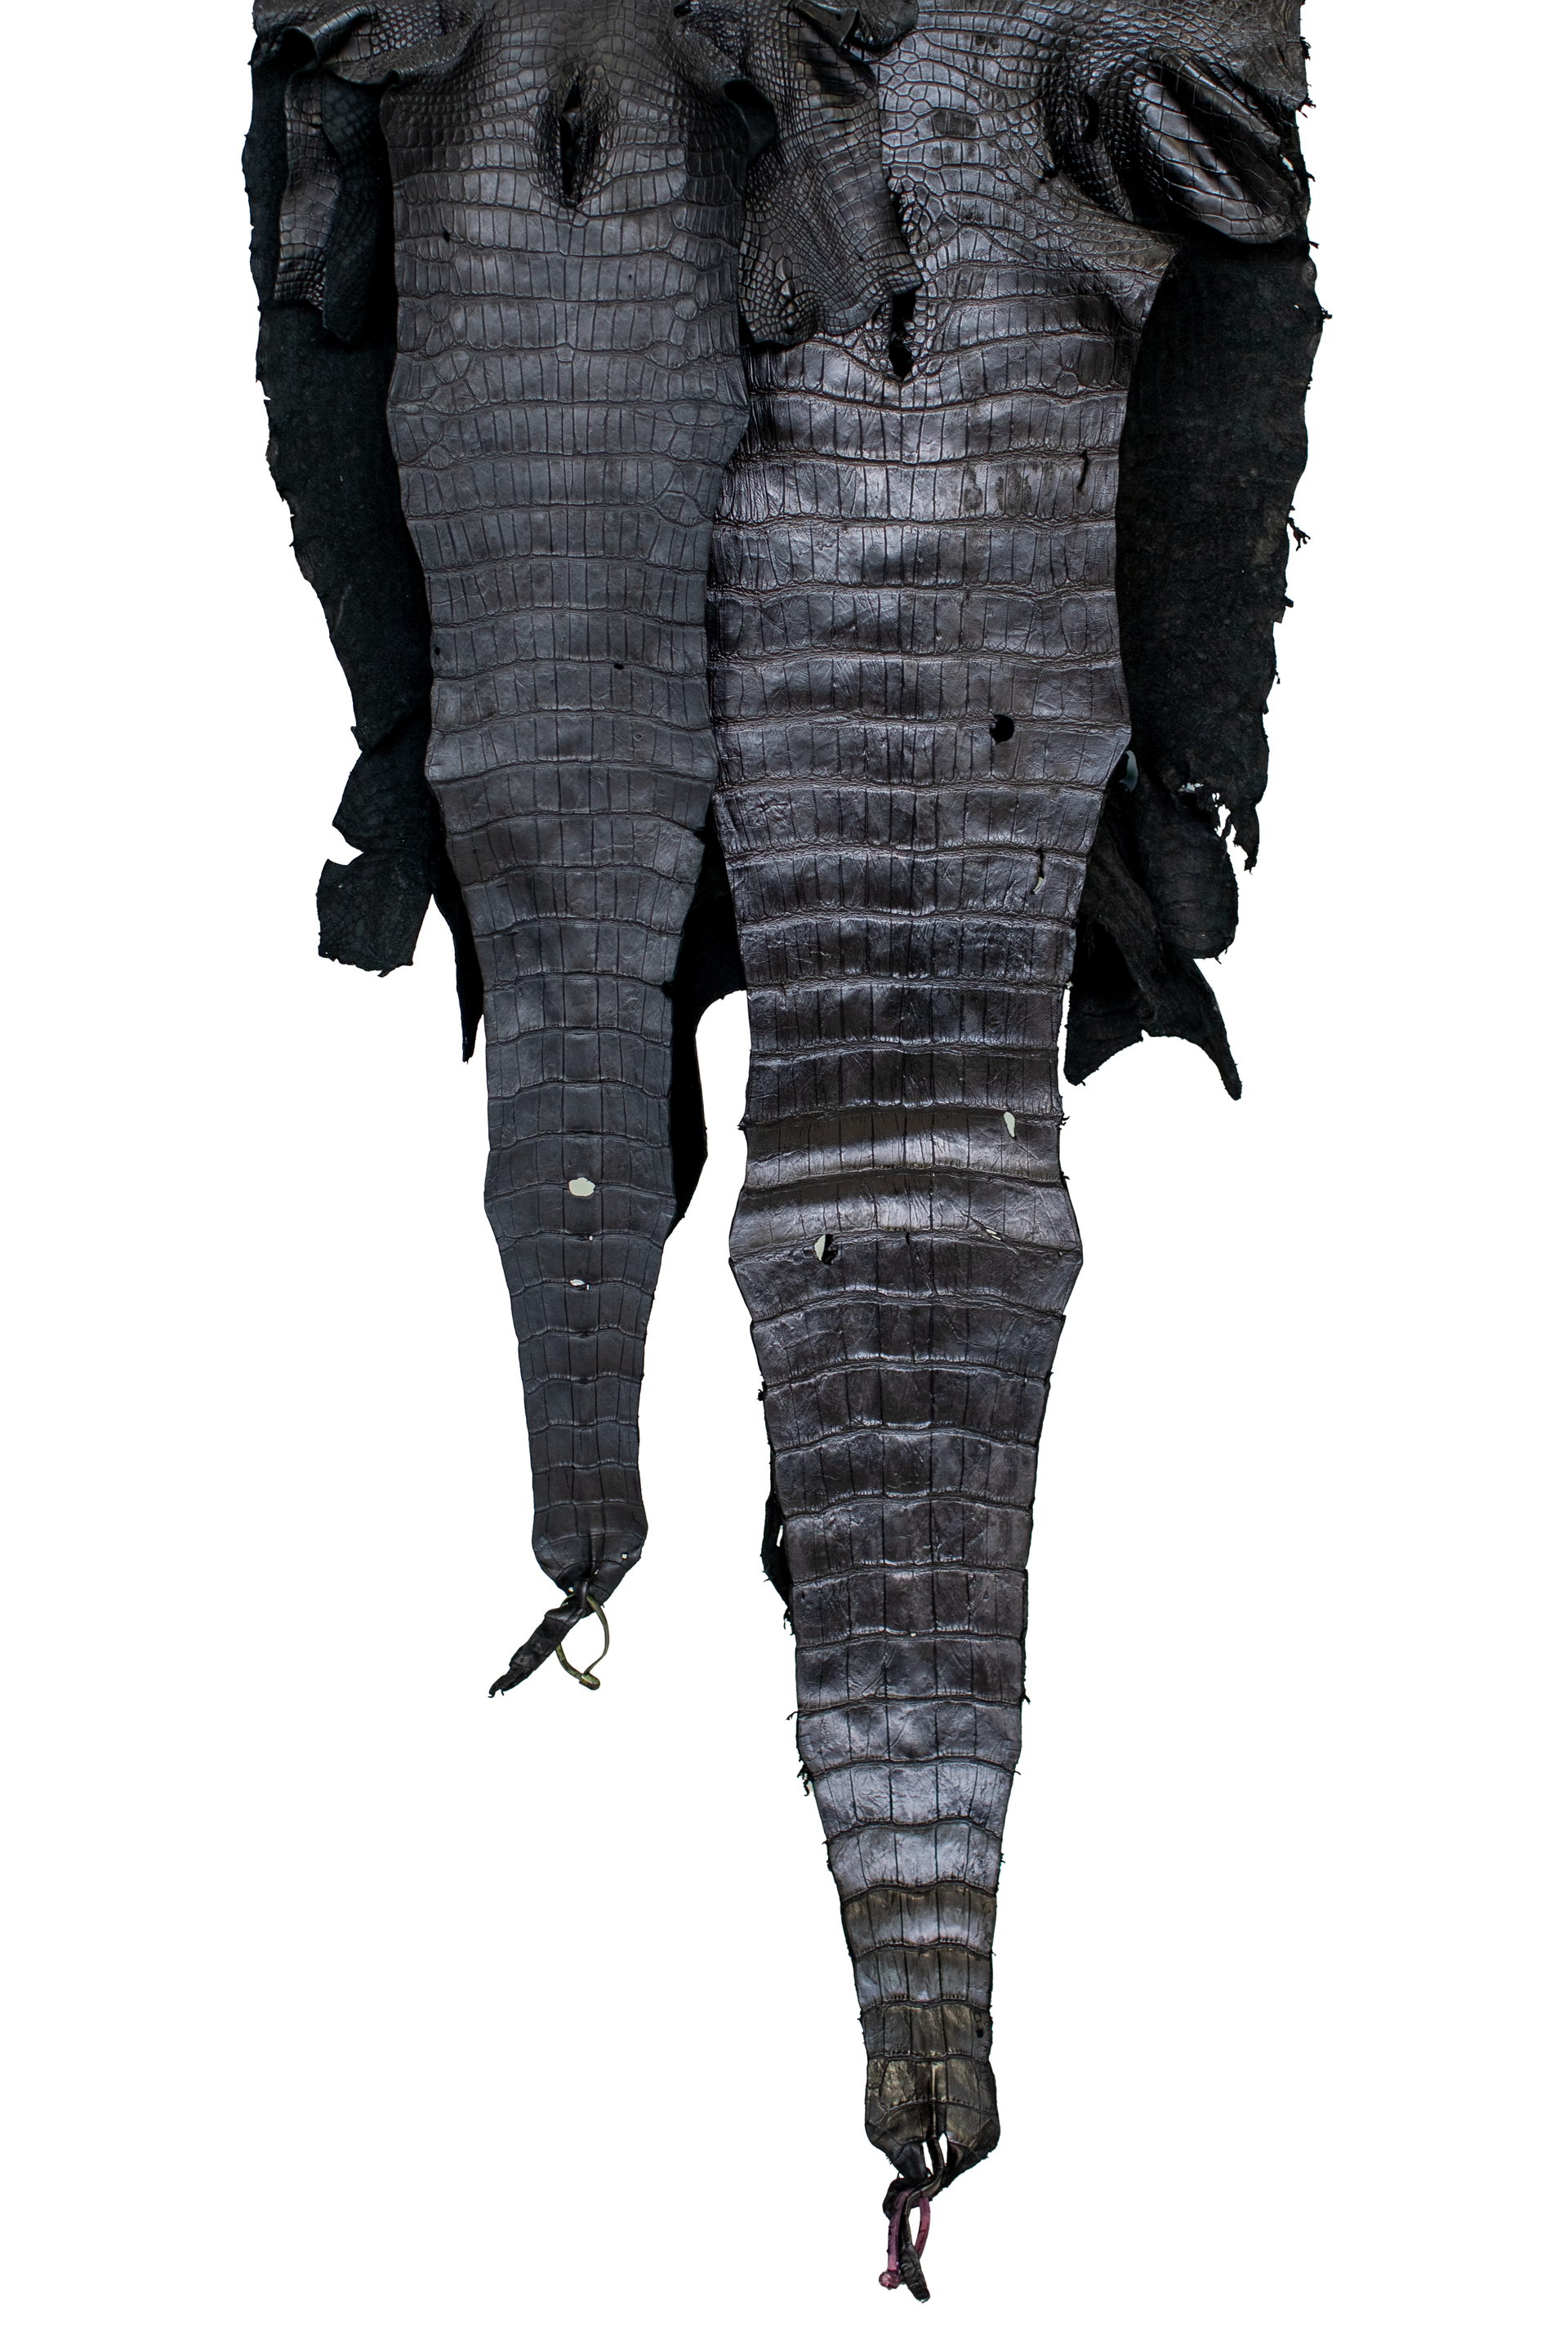 REJECTS | 51-68 cm Grade 4/5 Black Matte Wild American Alligator Leather